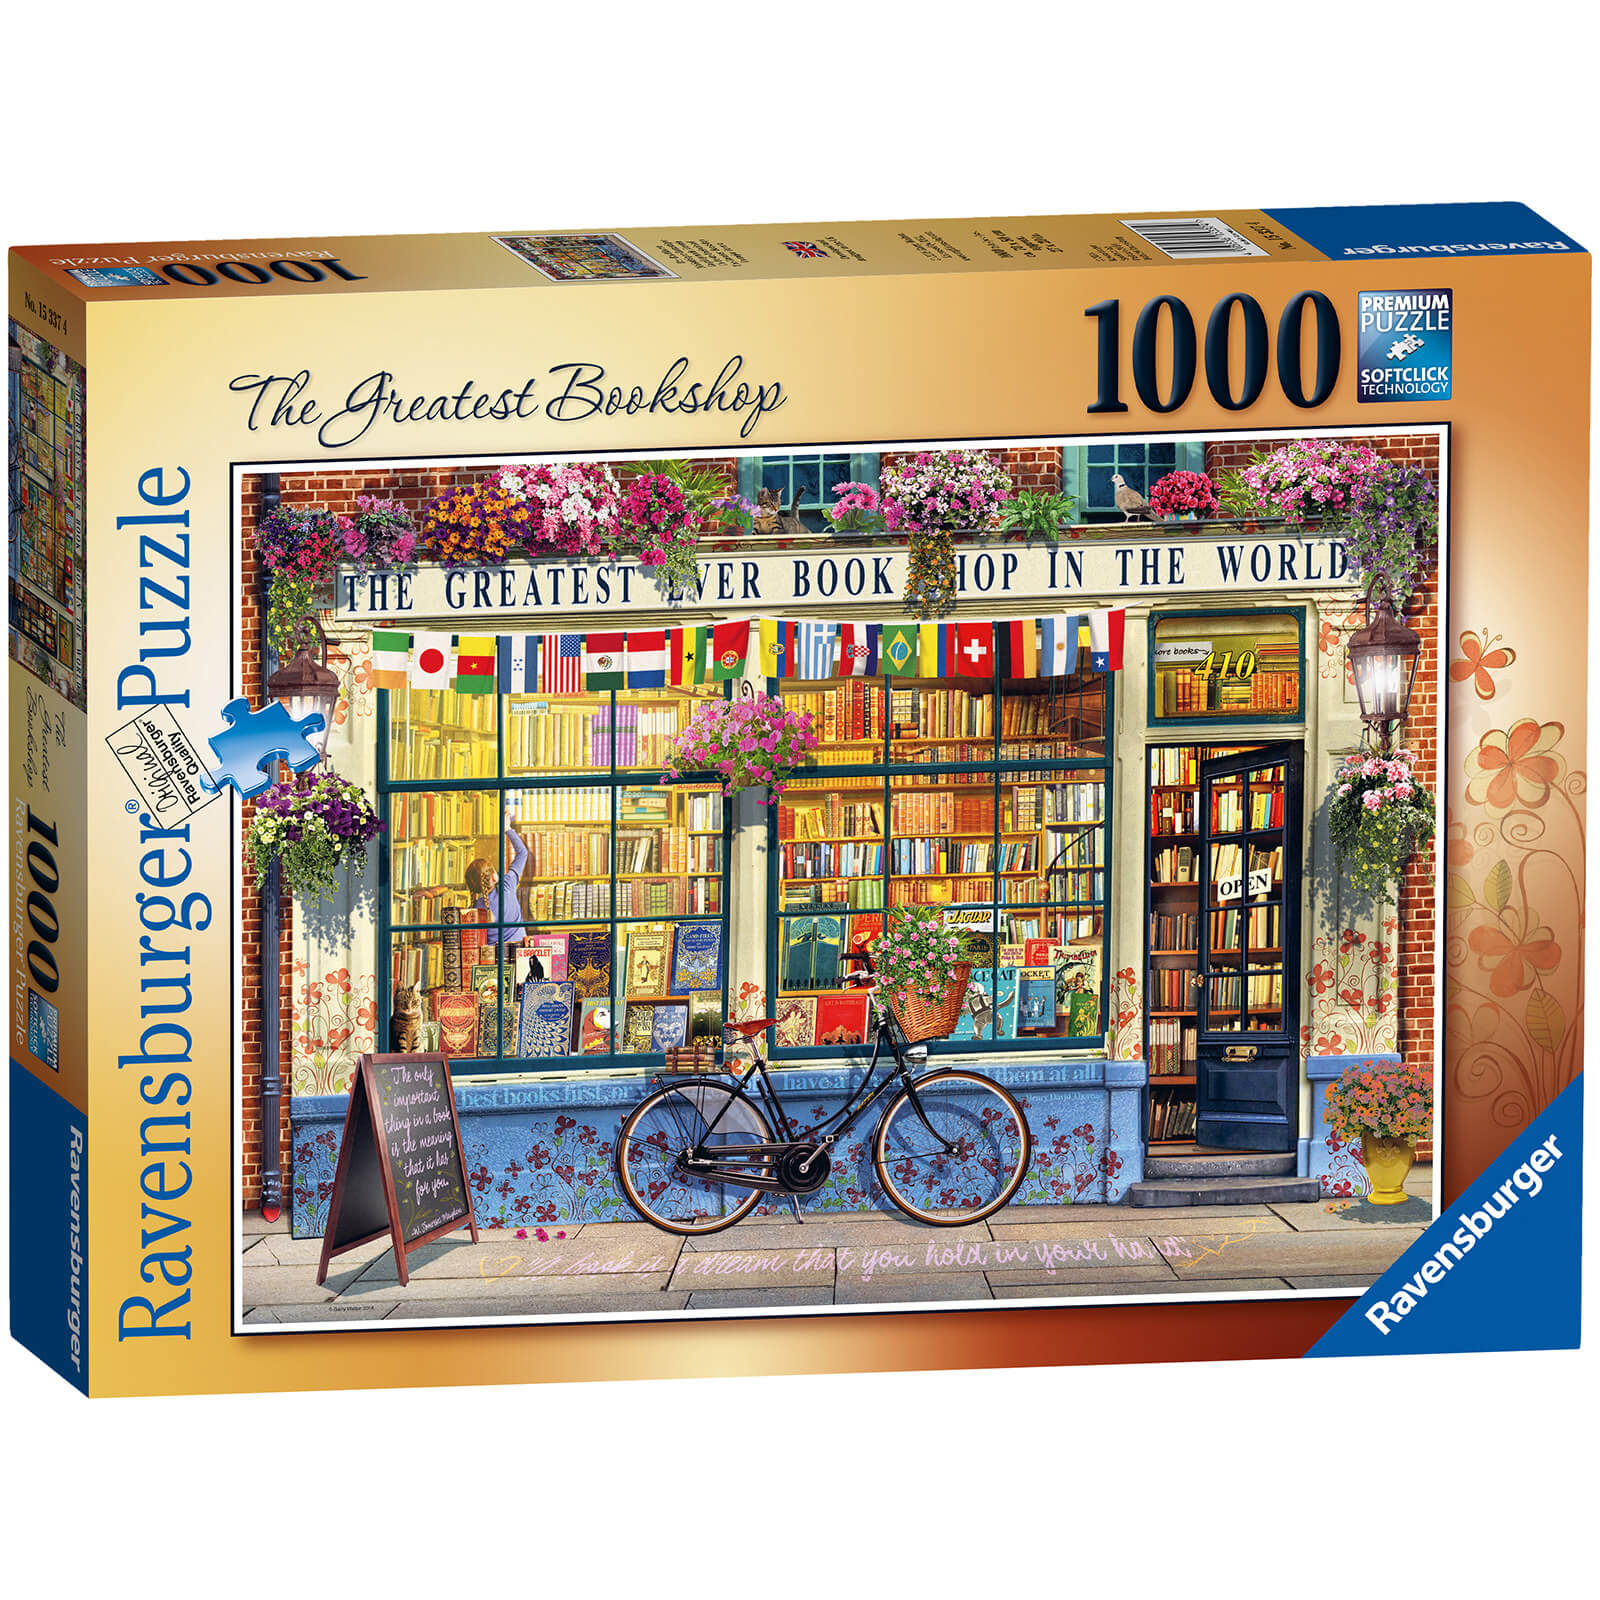 Ravensburger The Greatest Bookshop 1000 piece Jigsaw Puzzle